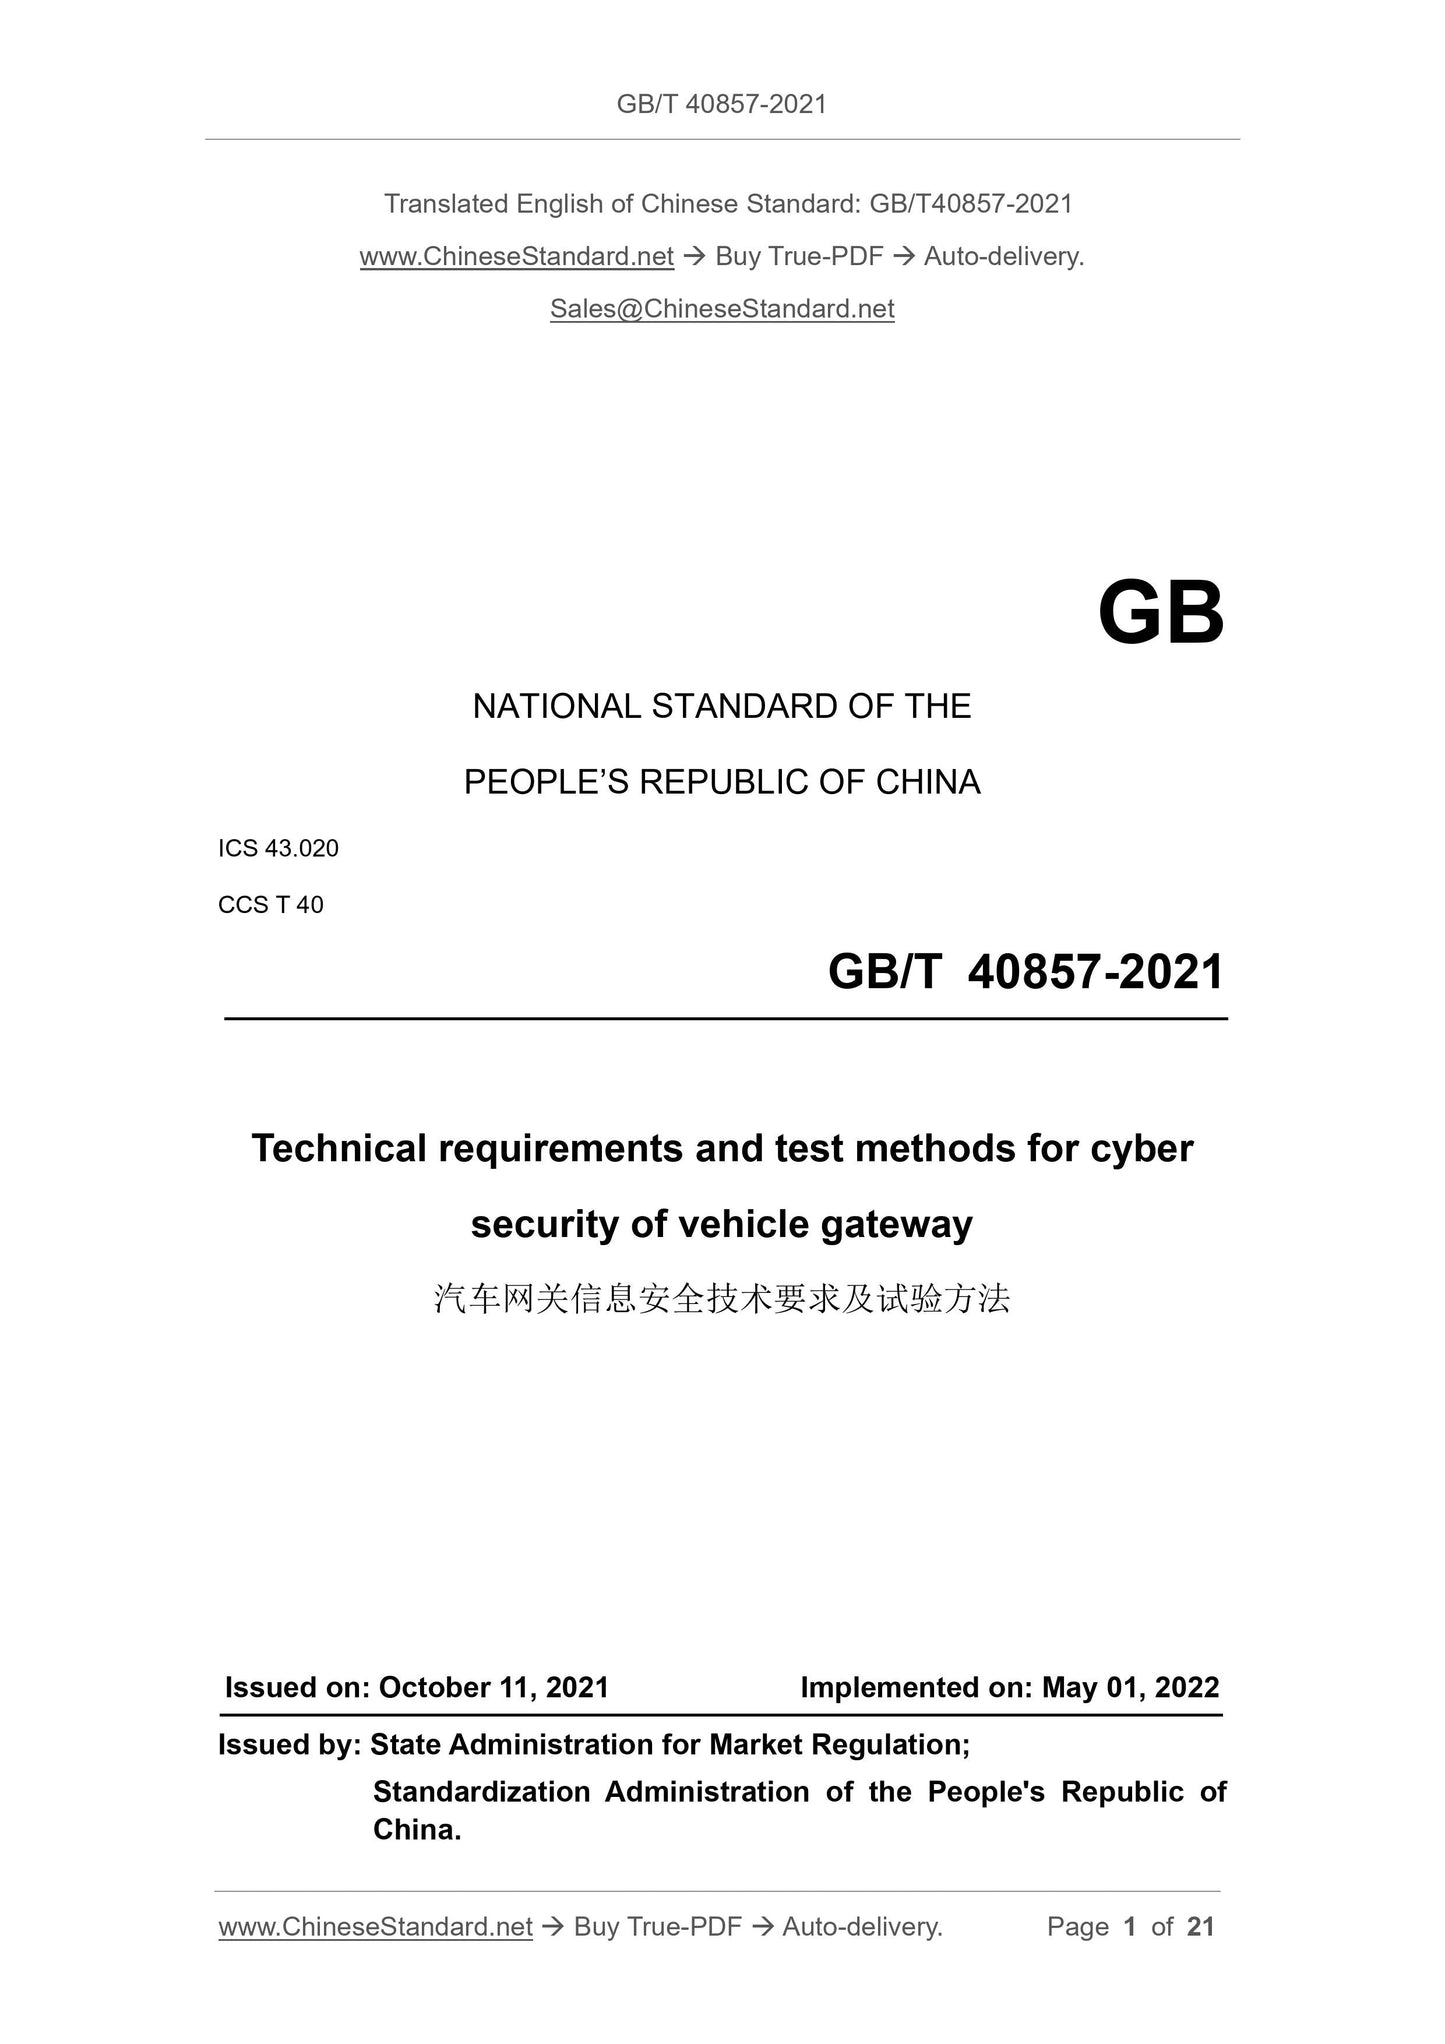 GBT40857-2021 Page 1